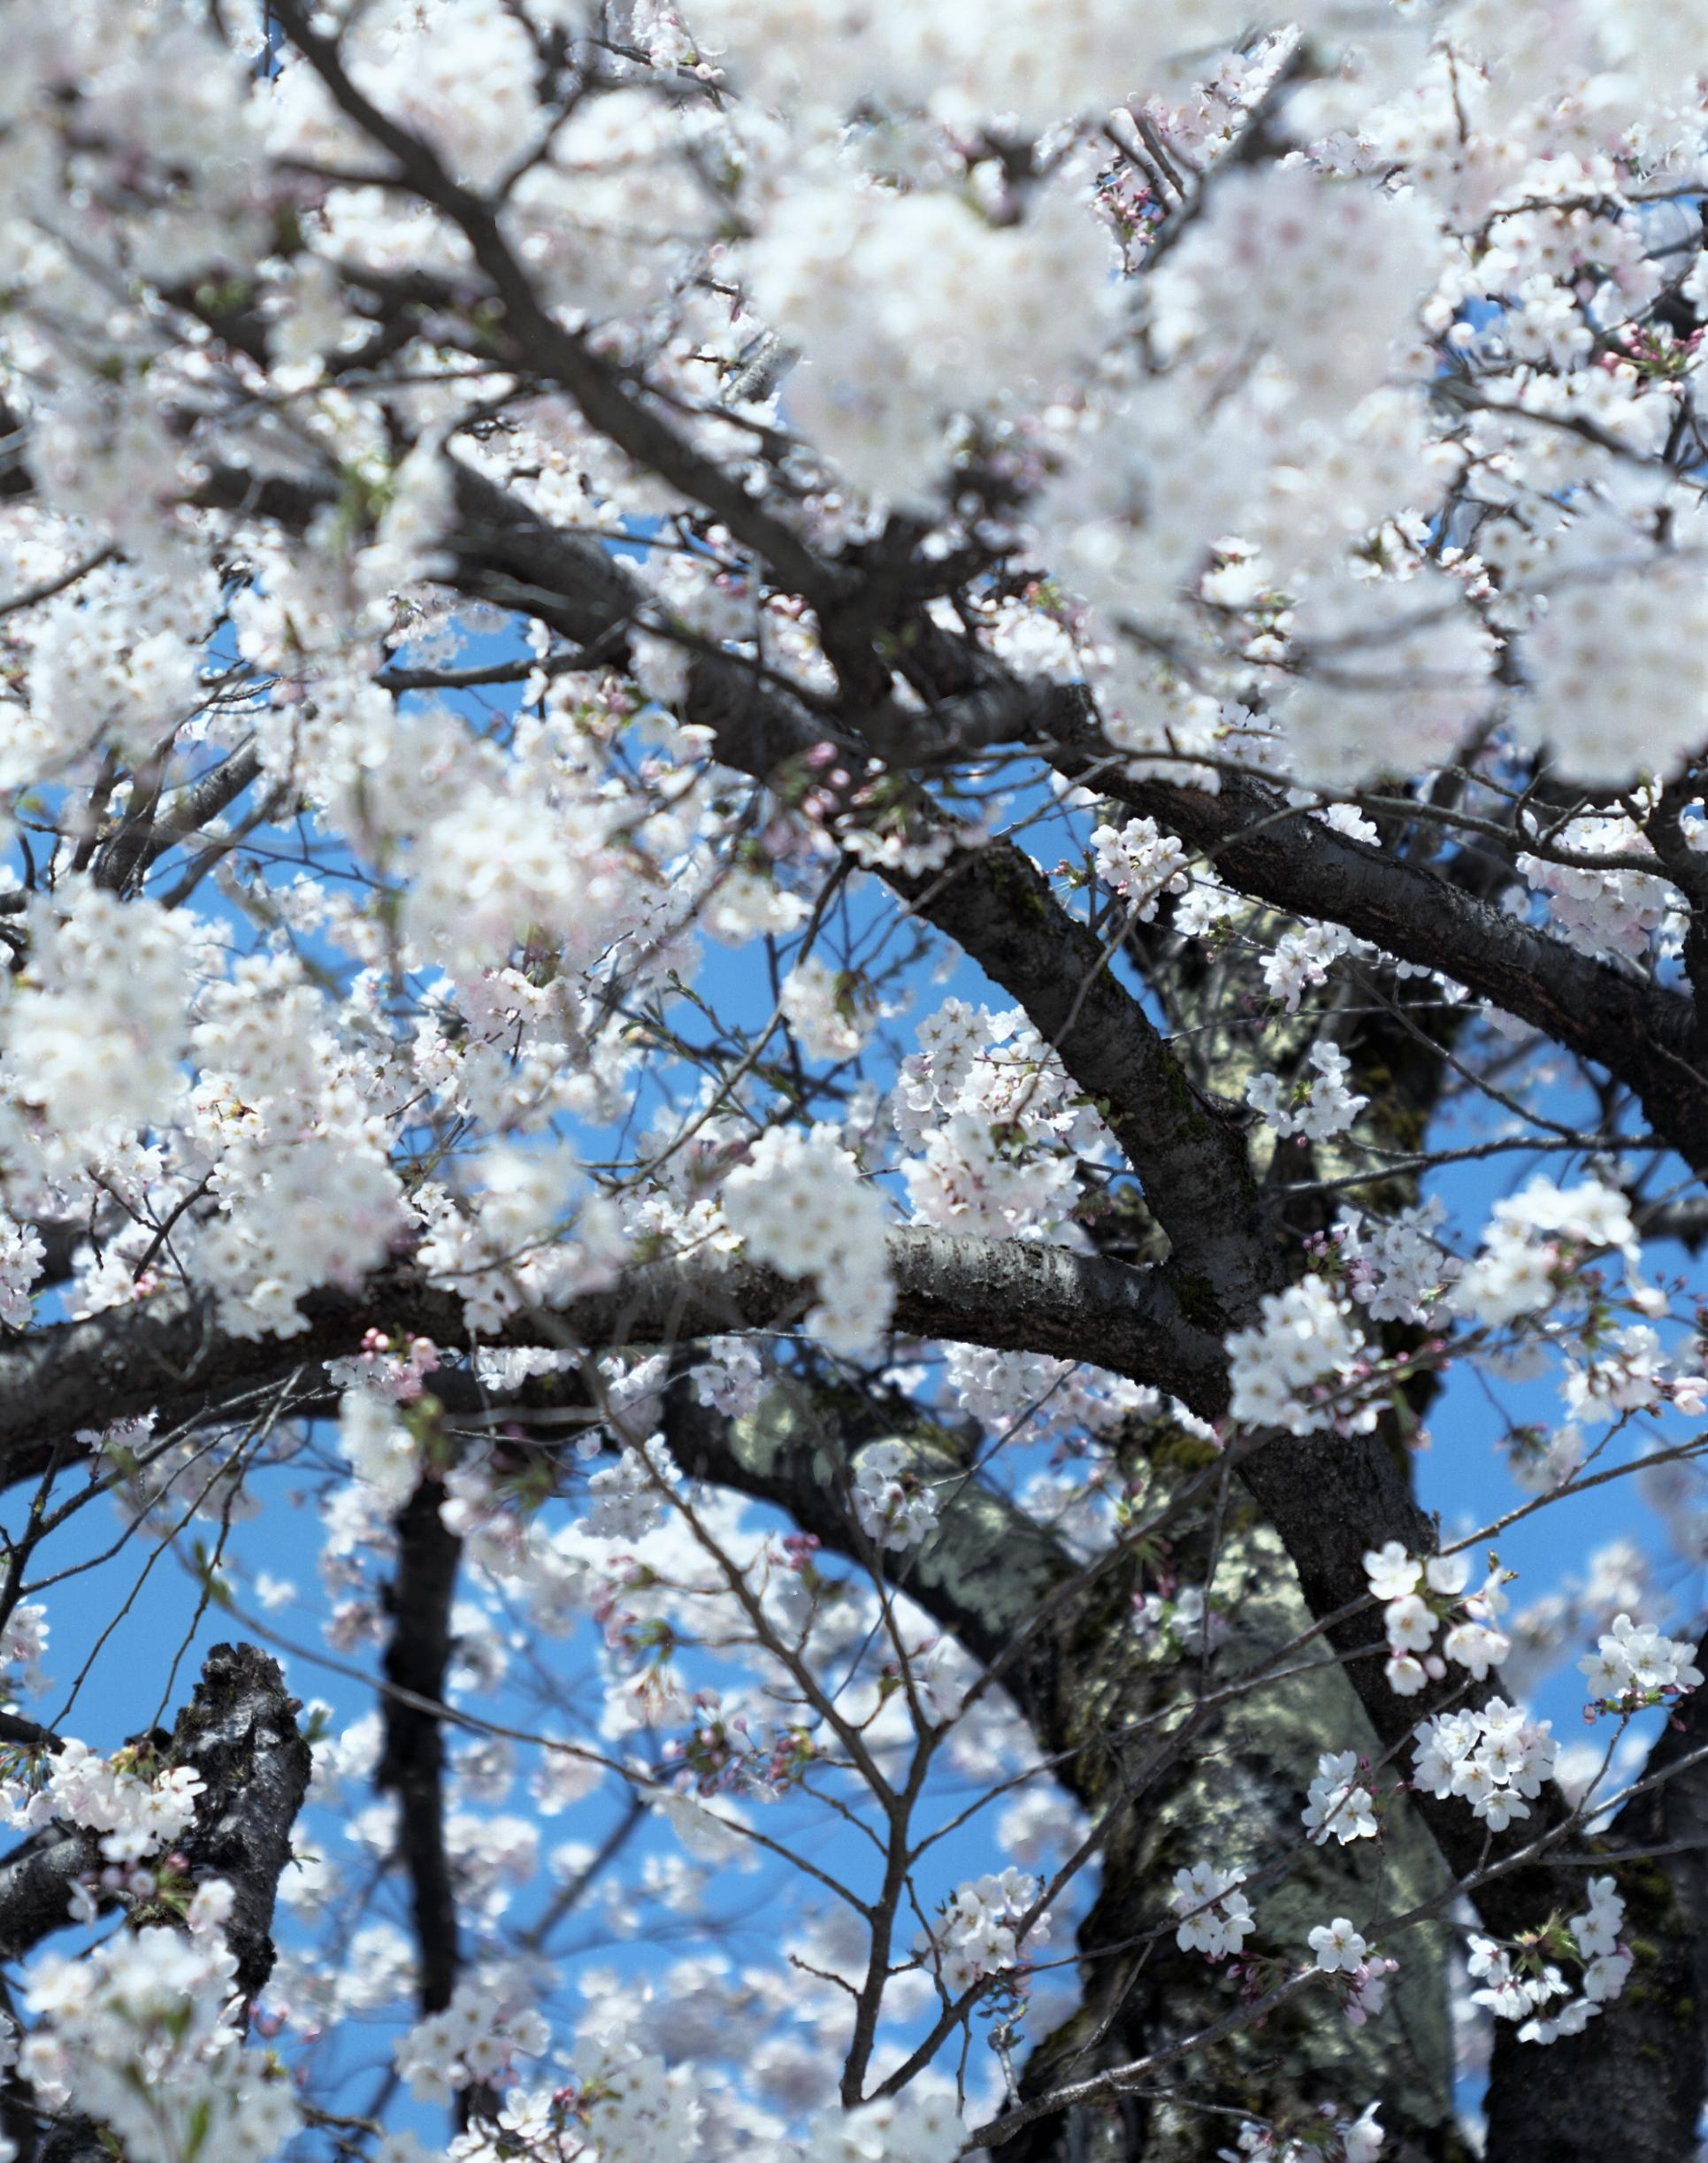 RISAKU SUZUKI (*1963, Japan)
SAKURA 15,4-66
2015
Chromogenic print
Sheet 75 x 60 cm (29 1/2 x 23 5/8 in.)
Edition of 5; Ed. no. 1/10
Framed

The Sakura (Japanese term for ‘cherry blossoms’) Celebration commences in early spring and has inspired